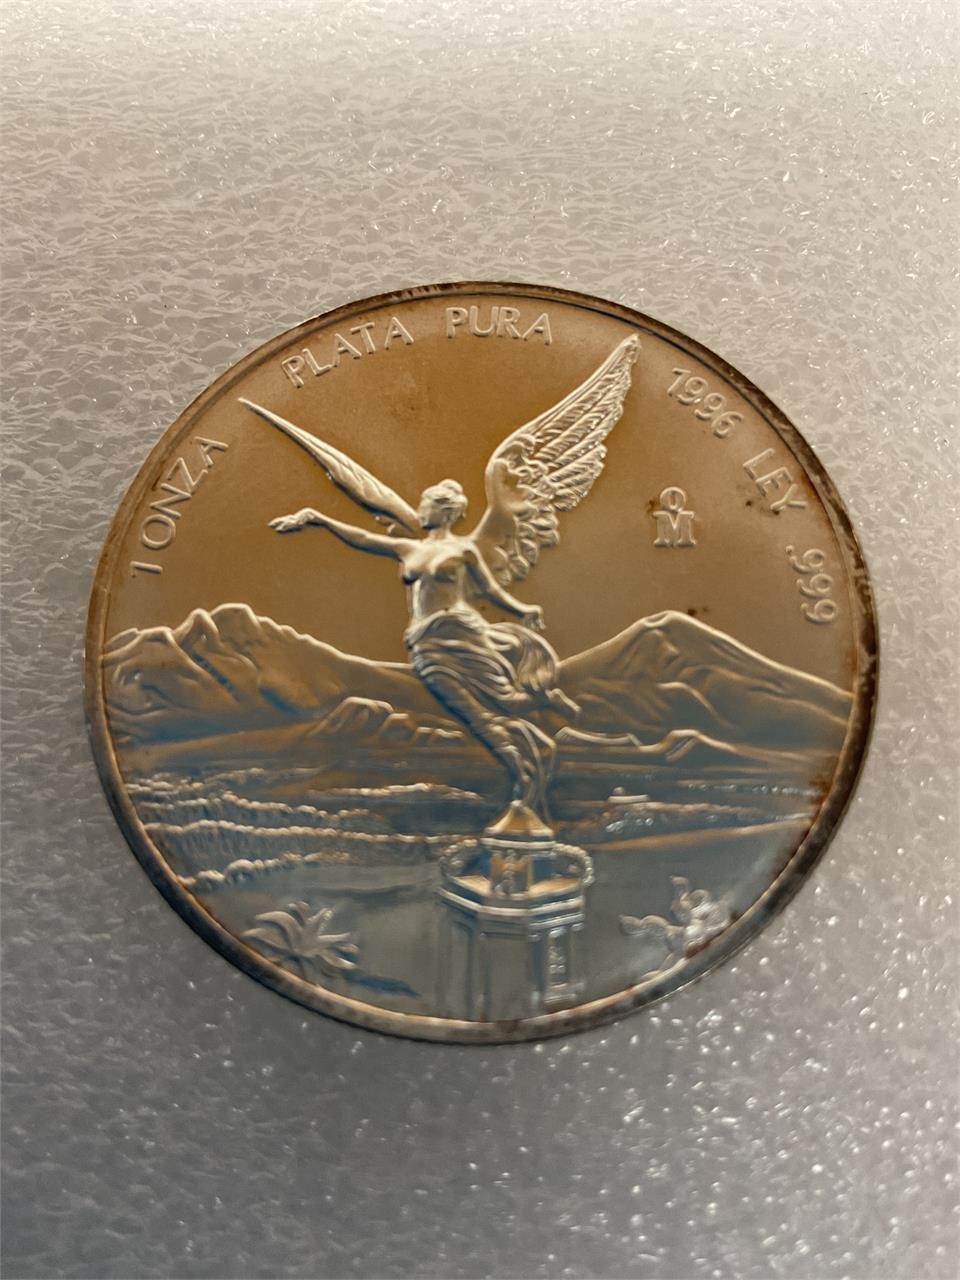 1996 One ounce silver peso